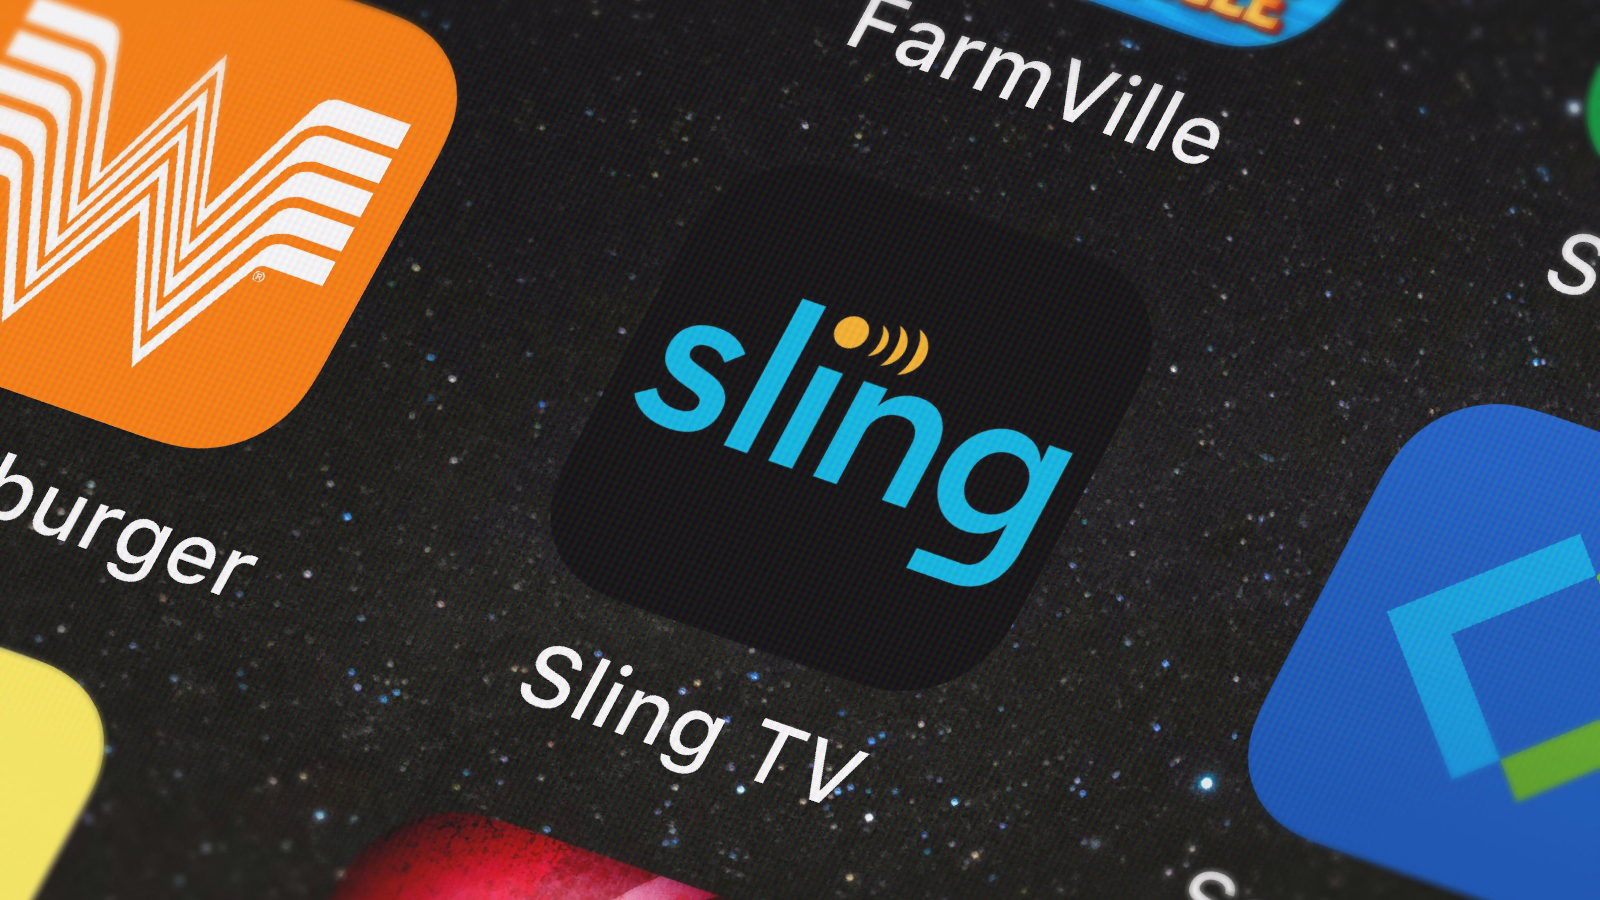 capture sling tv app windows 10